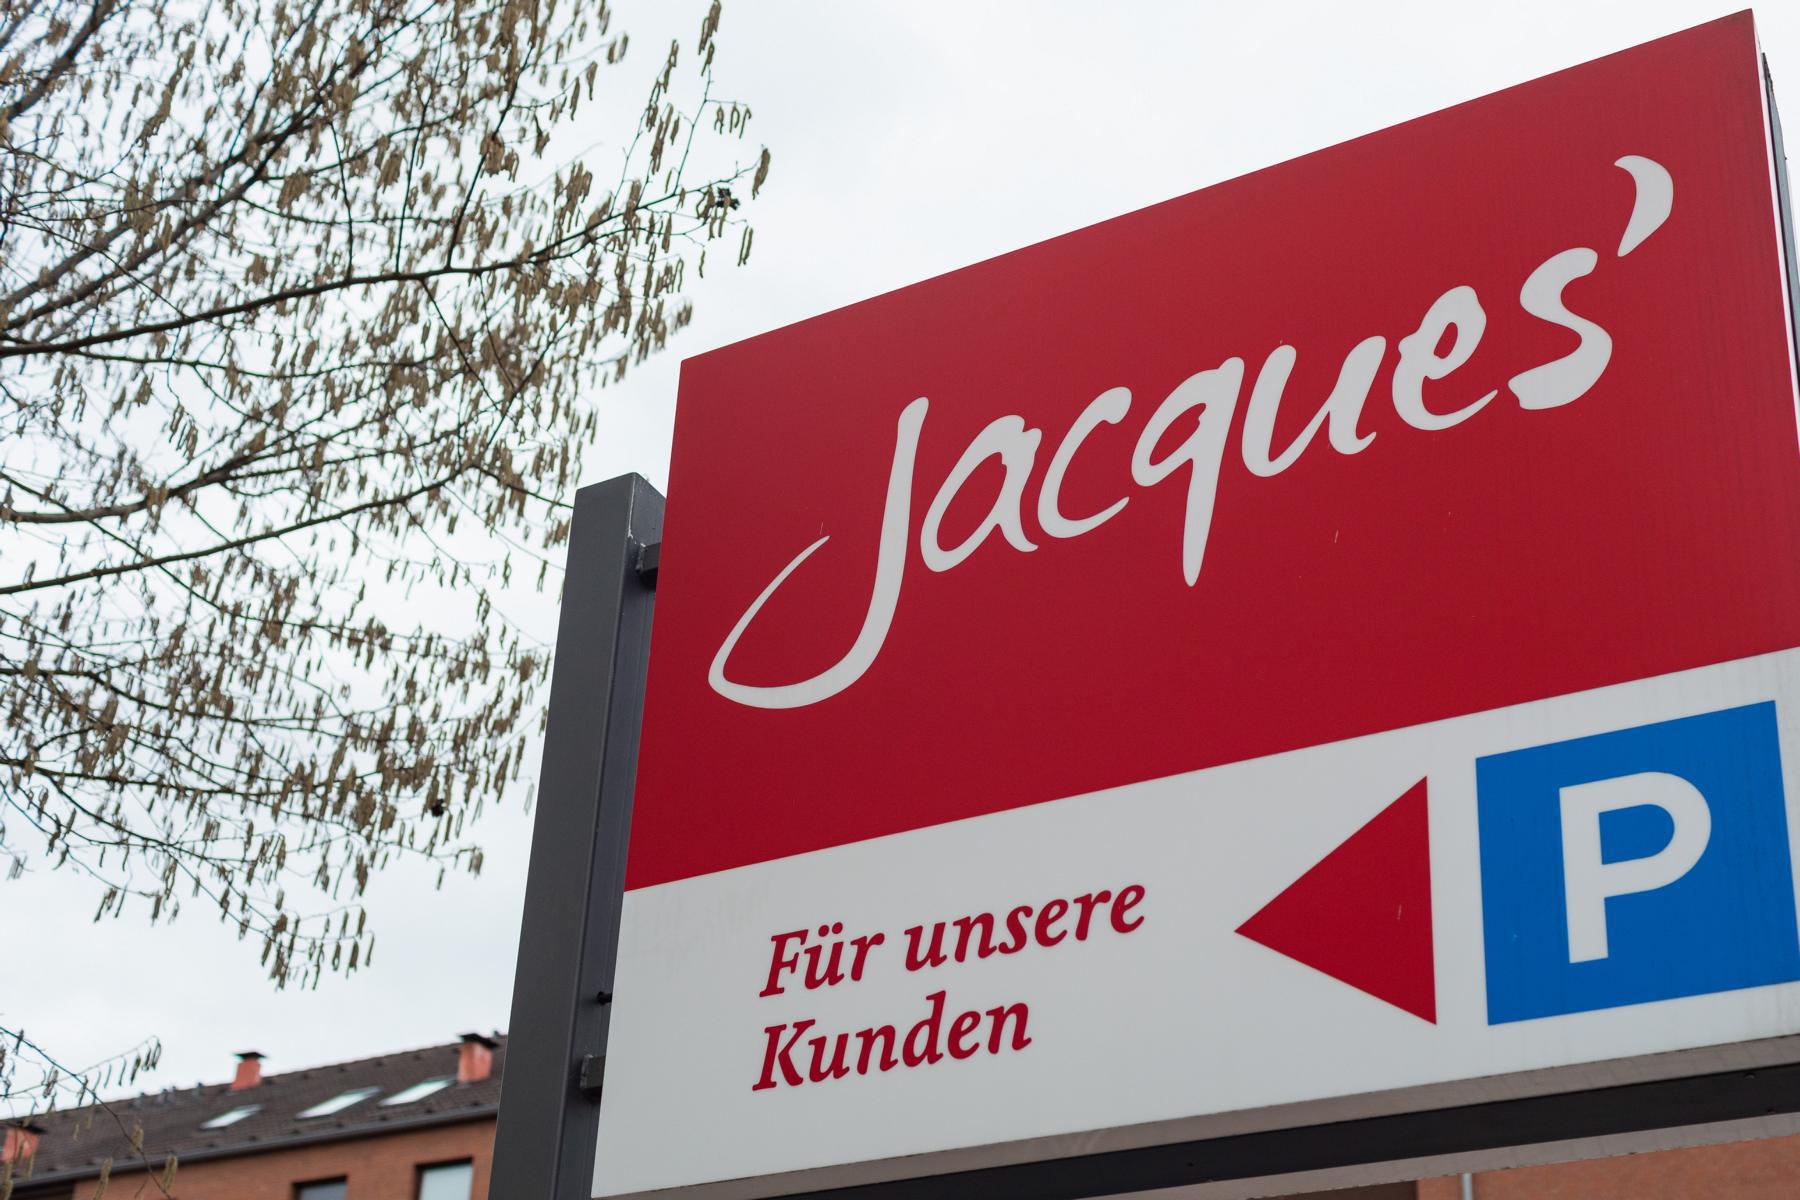 Bilder Jacques’ Wein-Depot Göttingen-Innenstadt